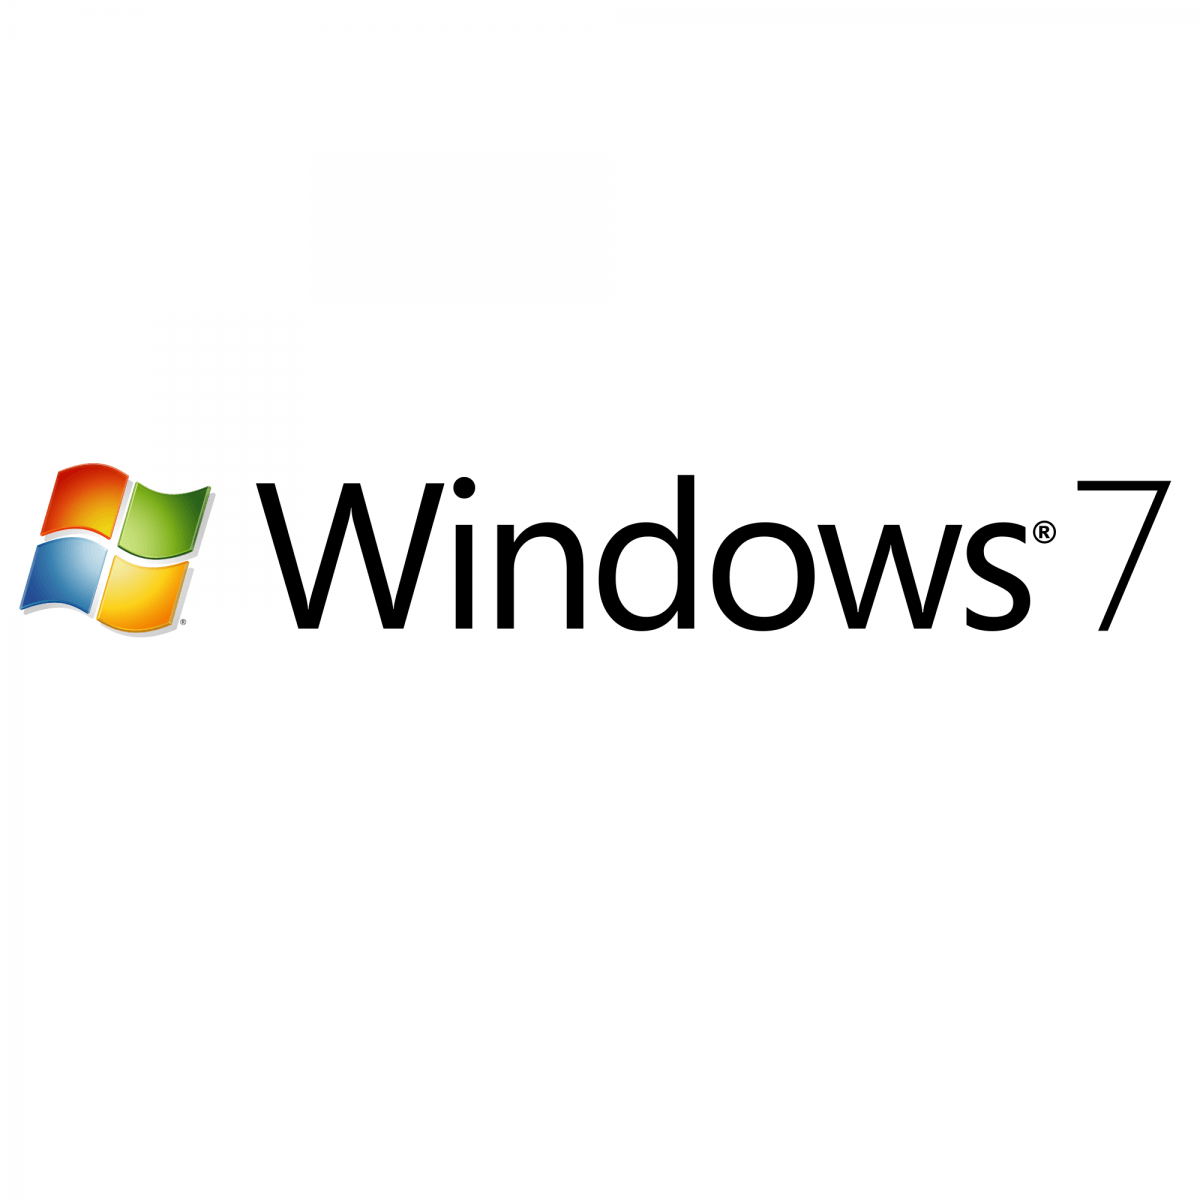 Windows 7 Professional Logo - Windows 7 Professional Logo 95286 | USBDATA